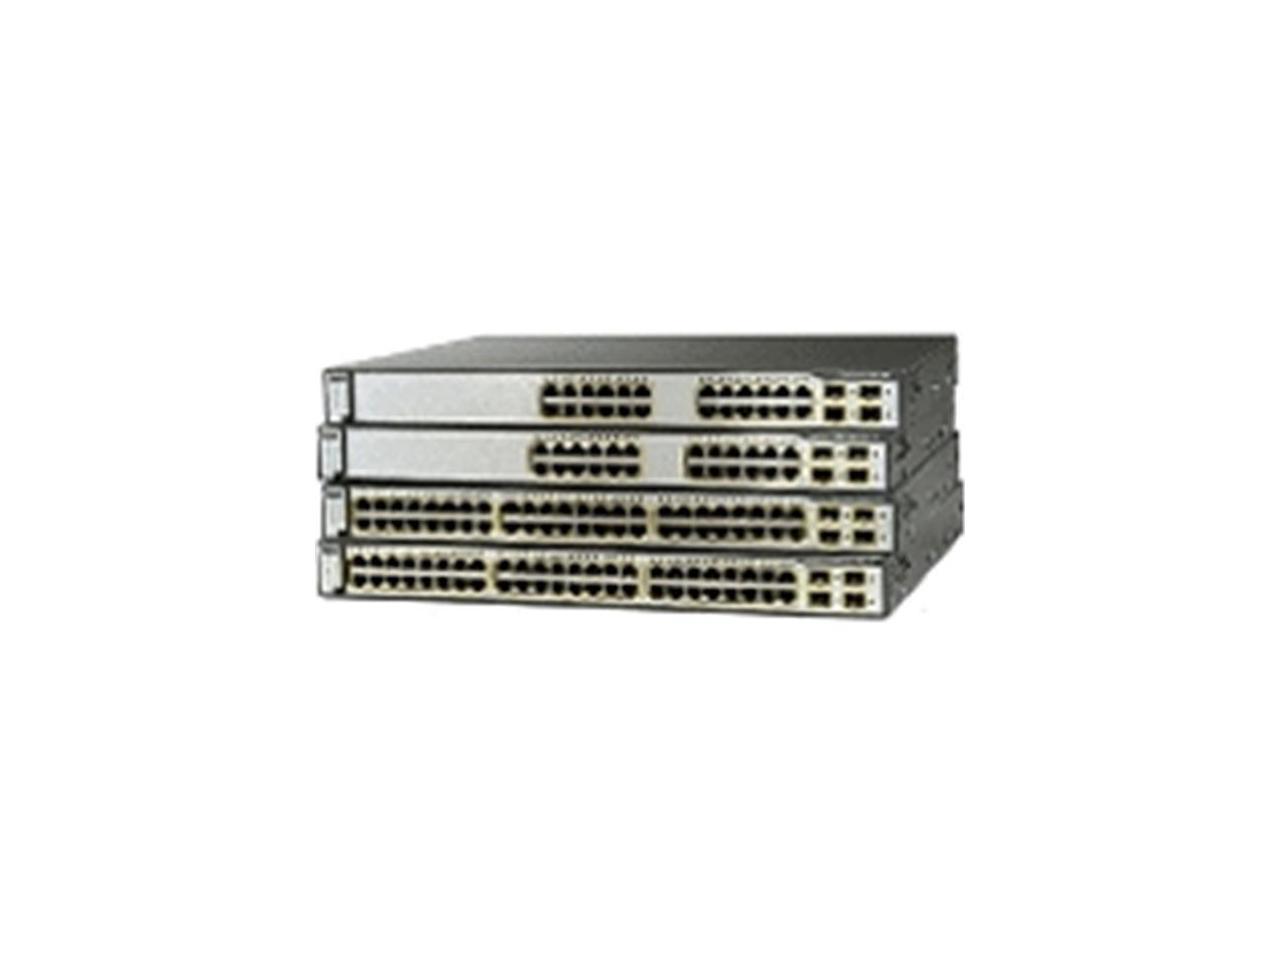 Cisco Sg550x-48Mp Layer 3 Switch